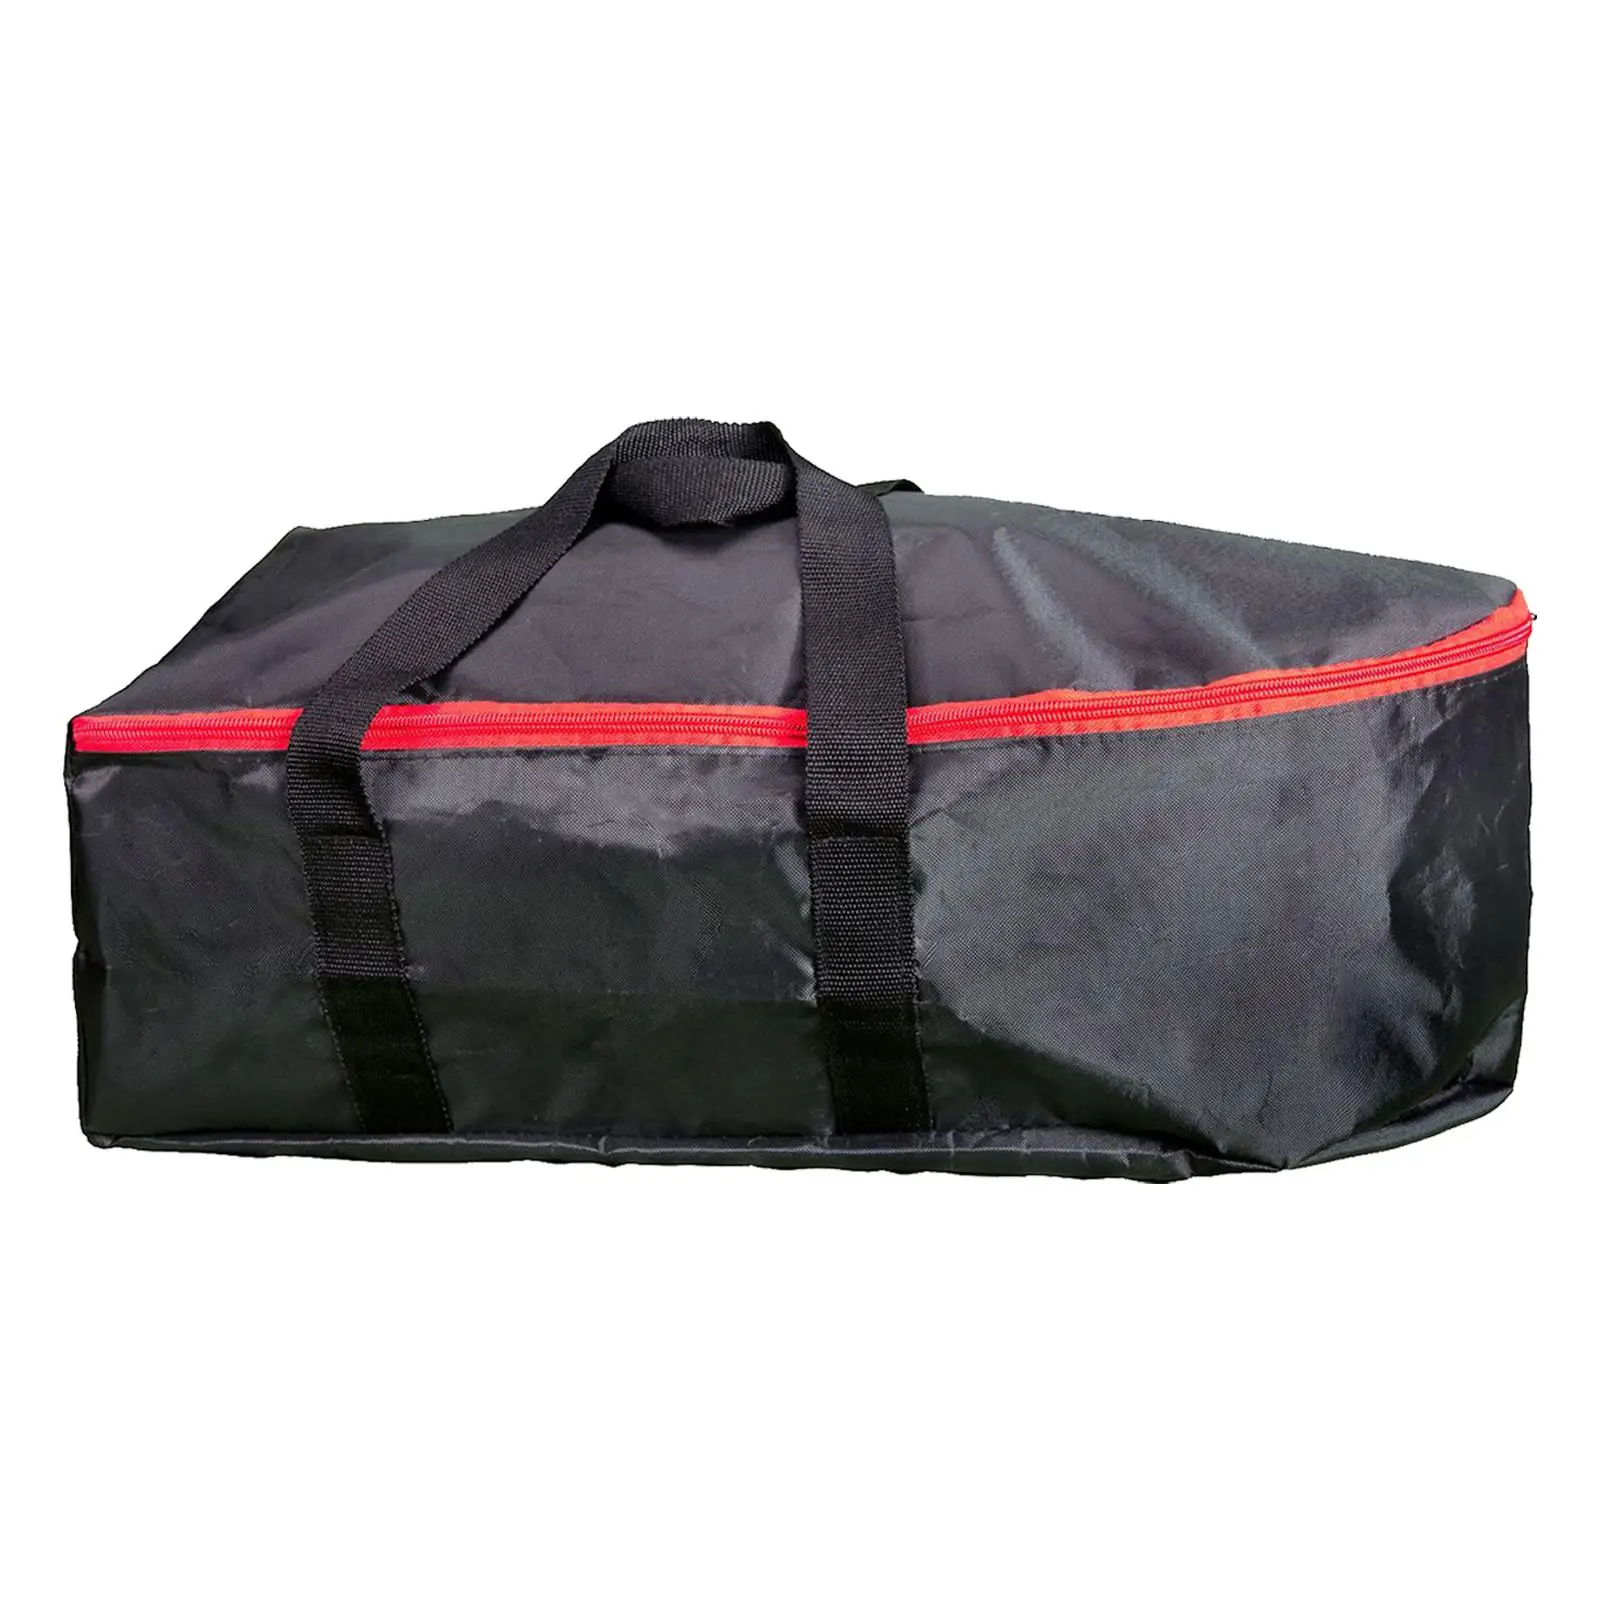 Bait Boat Storage Double Zippers Durable Carry Handbag Boat Gear Bag for Outdoor Activities